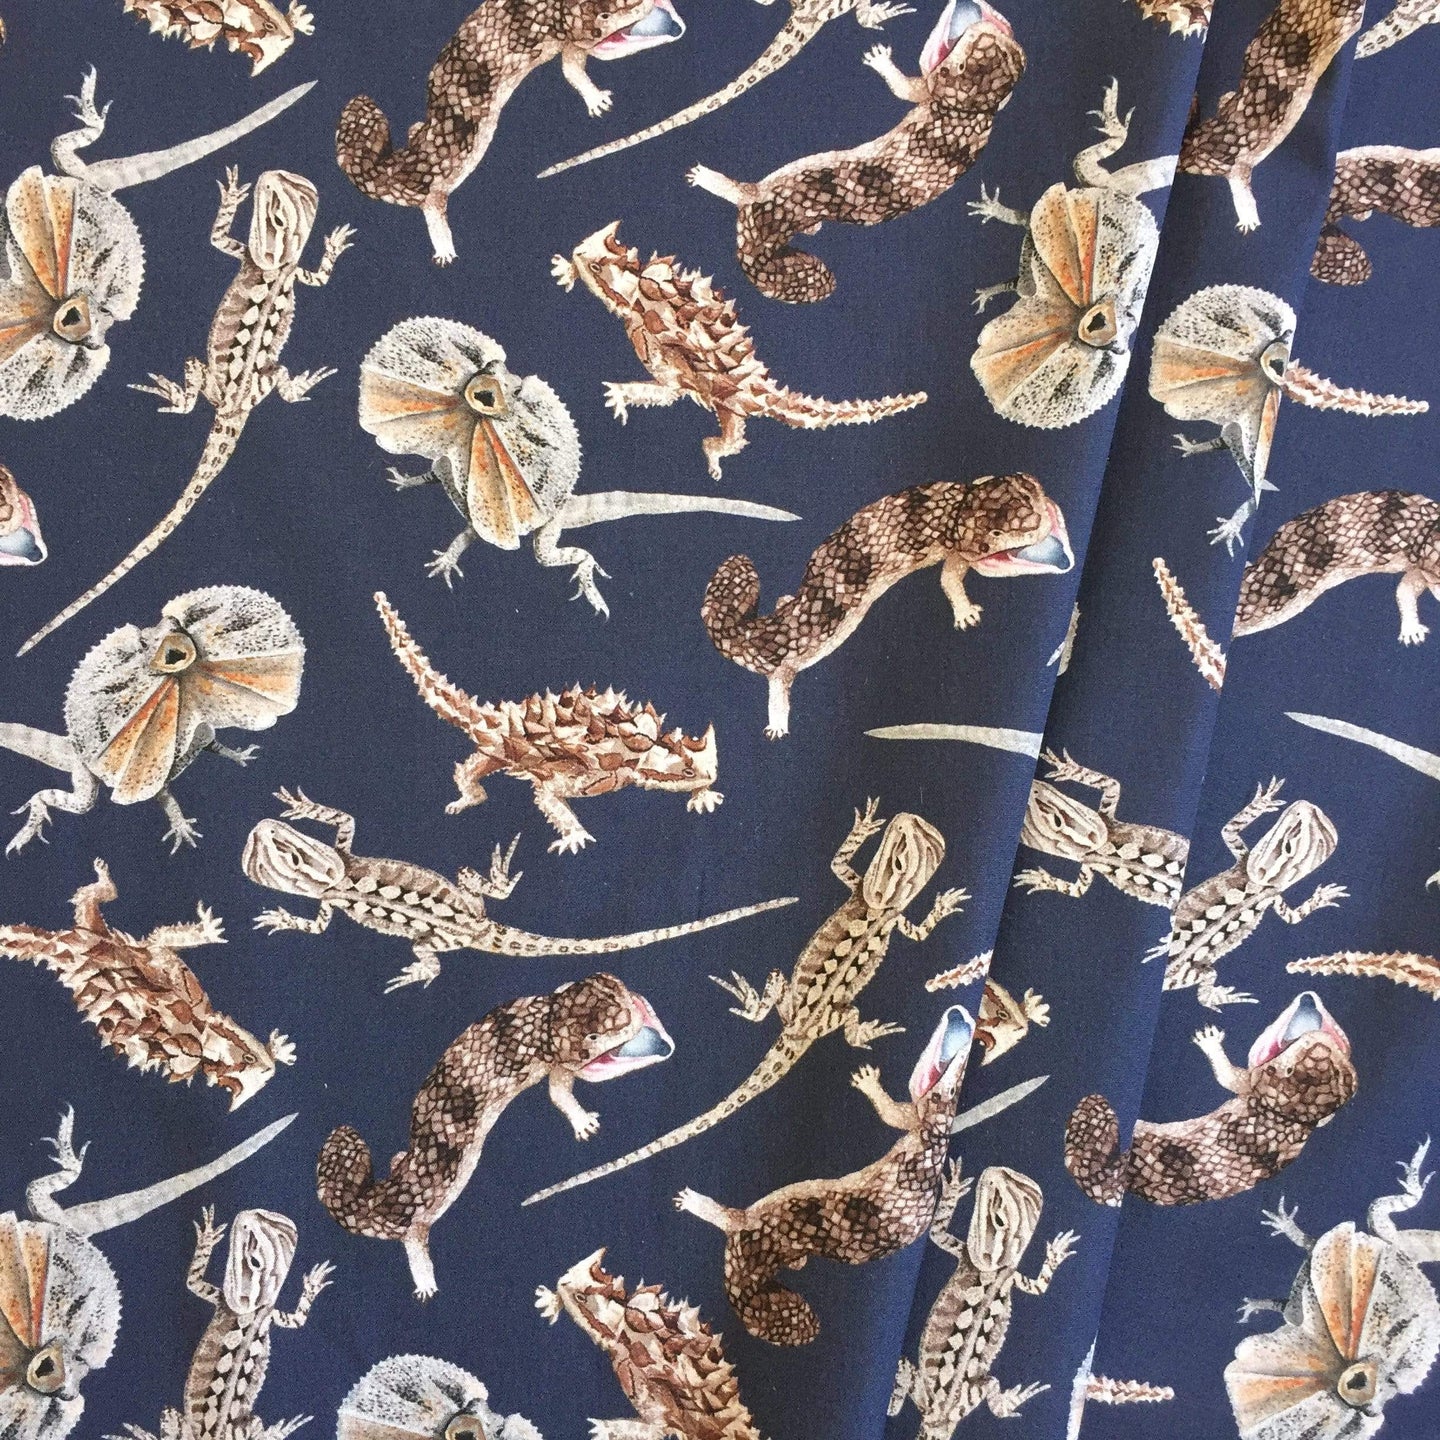 Australian Lizard Fabric Navy Cotton Poplin by the half meter Silken Twine